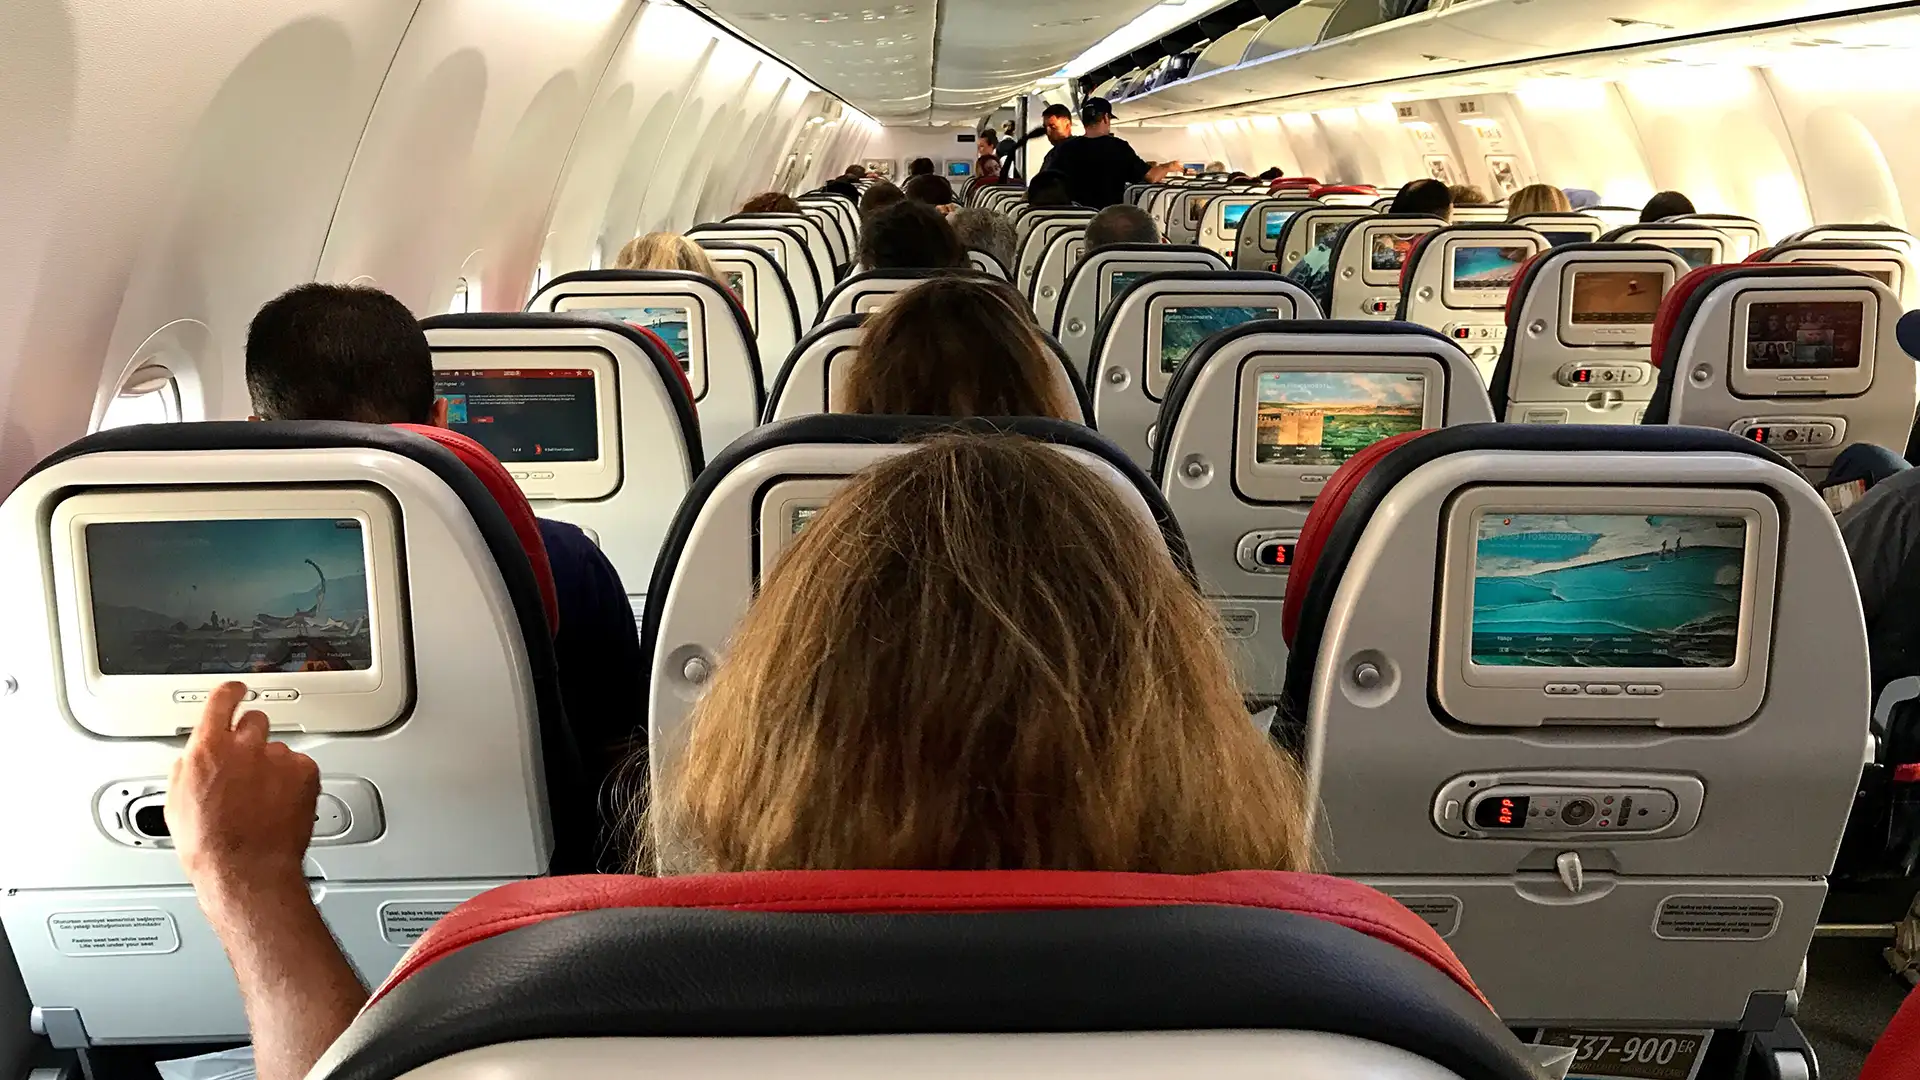 https://www.smartertravel.com/wp-content/webp-express/webp-images/doc-root/wp-content/uploads/2017/06/airplane-seats-woman-in-middle.jpg.webp